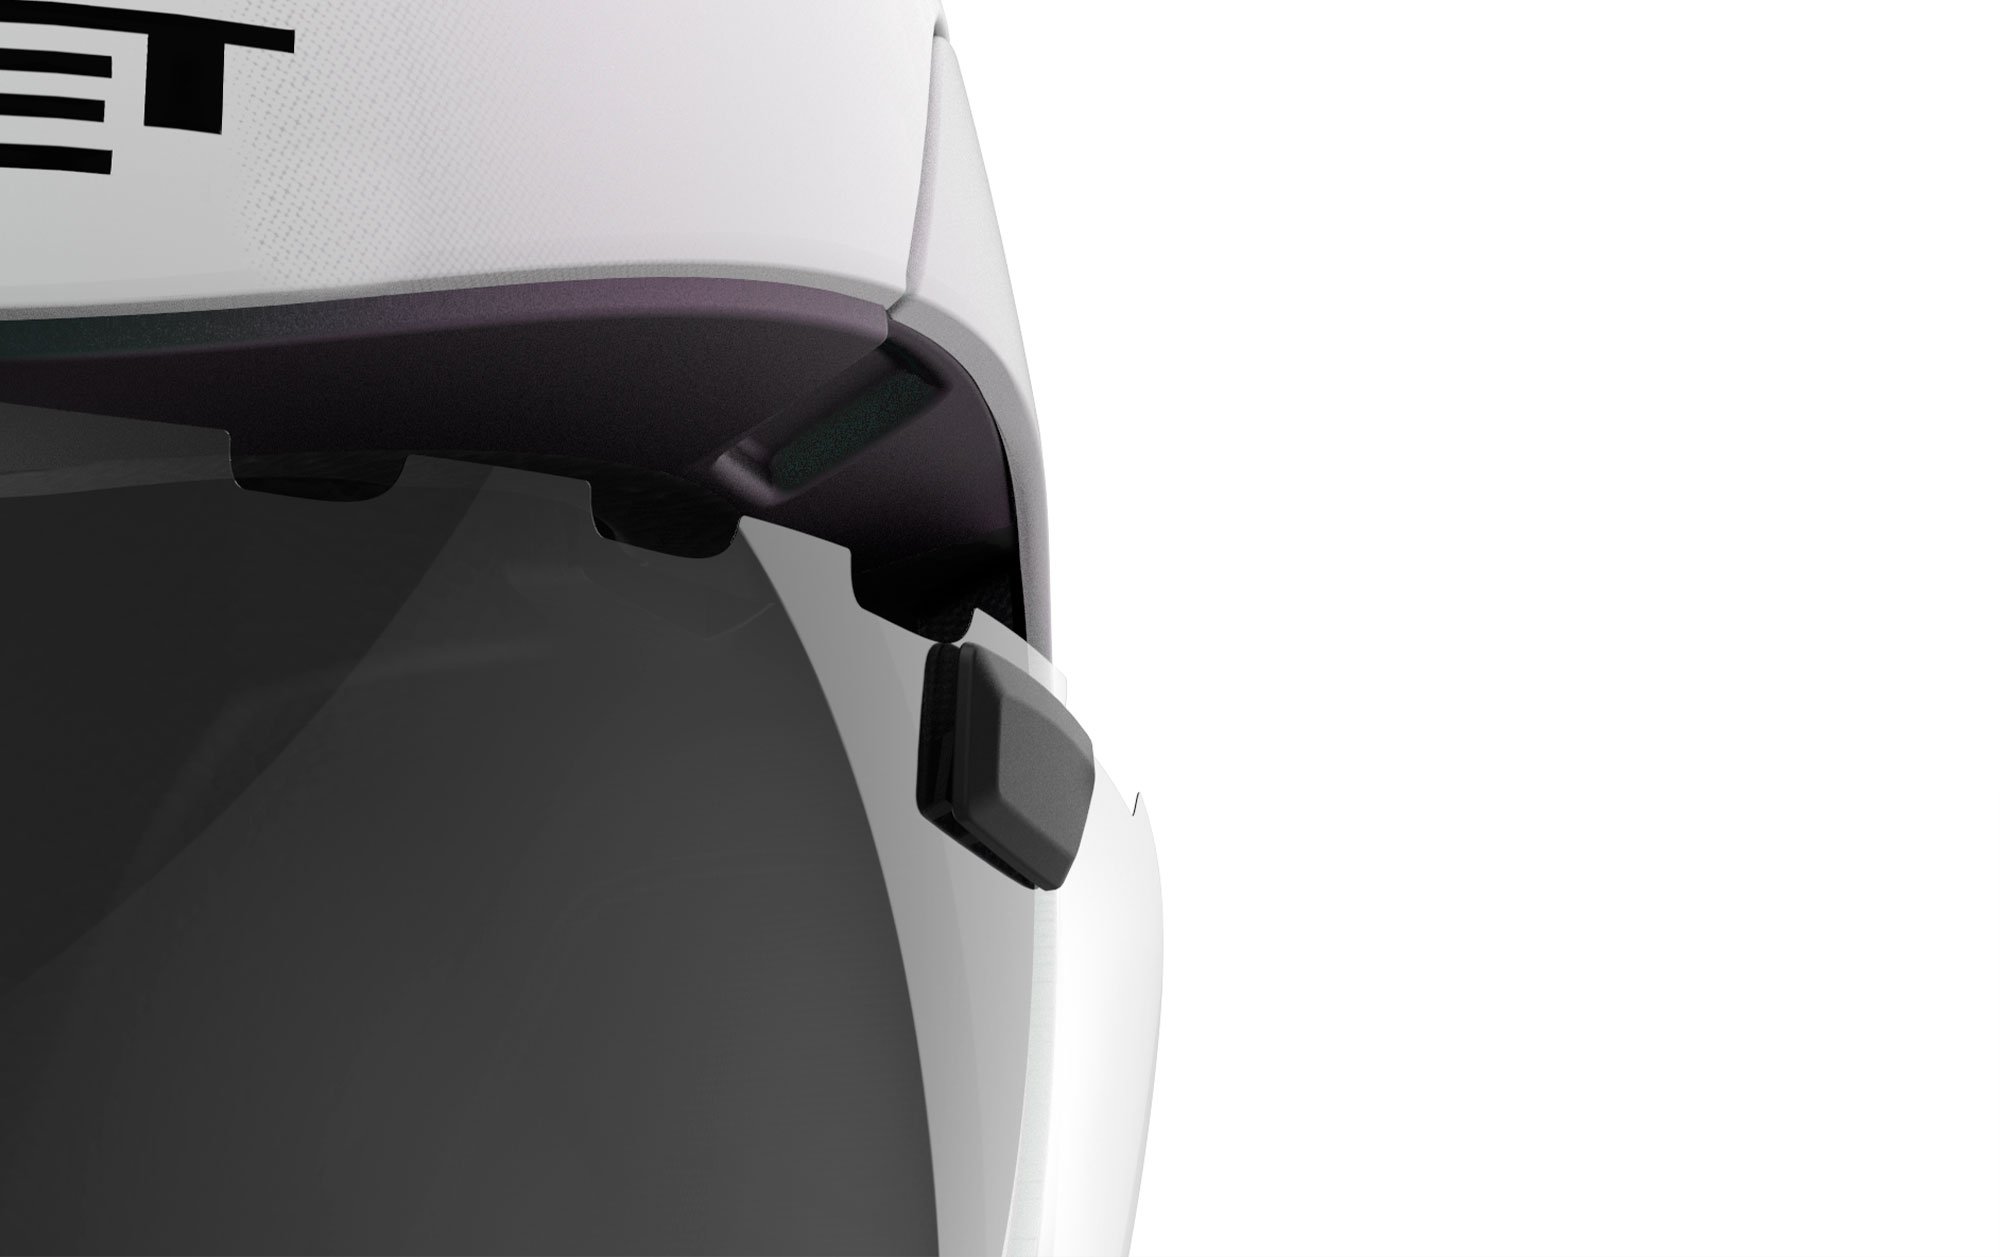 MET Drone Wide Body Aero Helmet for Triathlon and Time Trial